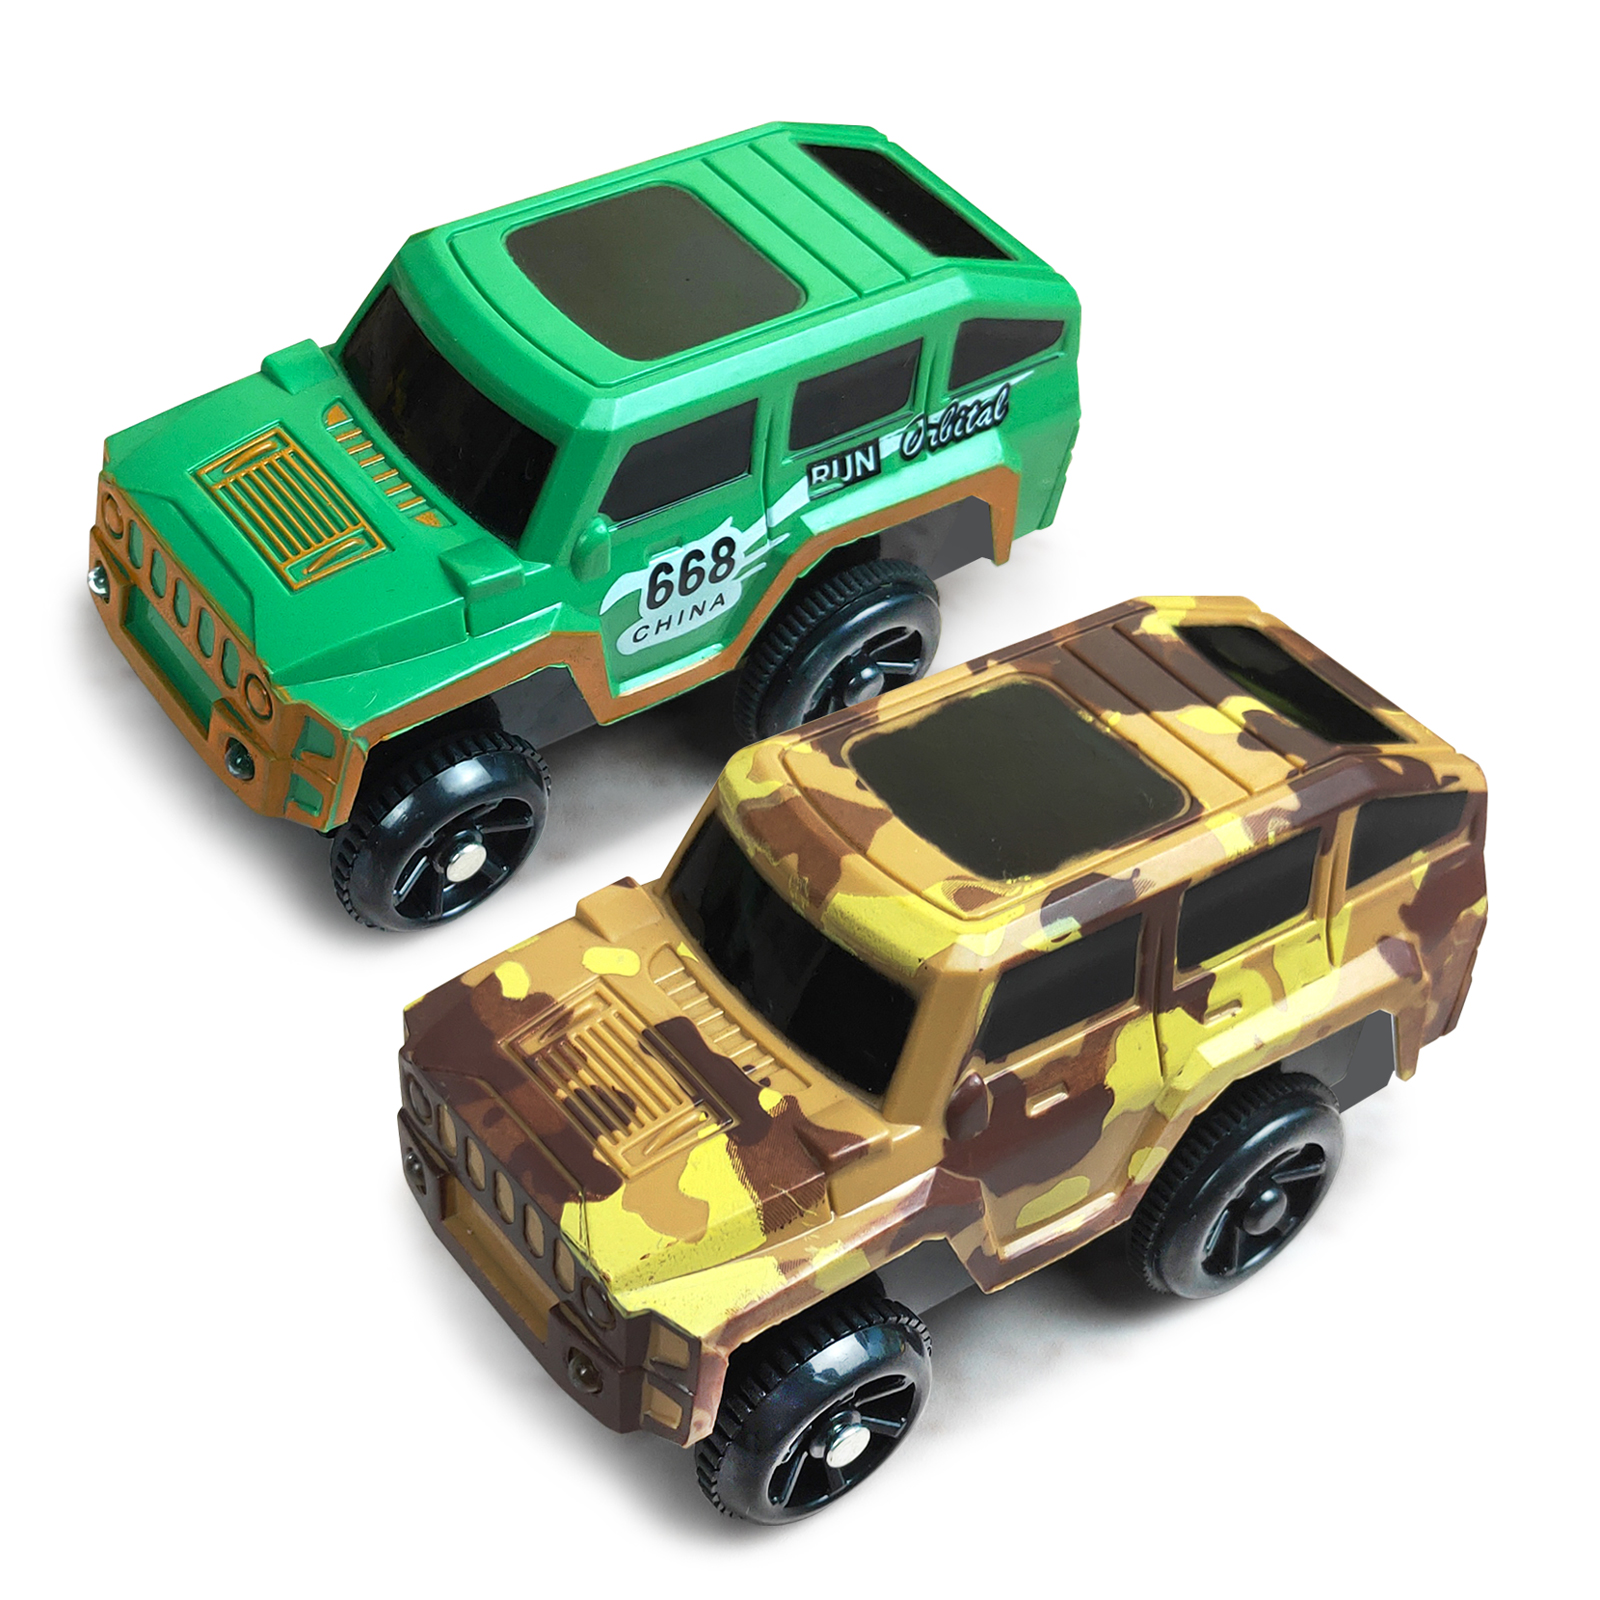 Dinosaur Toy Track Magical Flexible Railway Track Car Toys Racing Rail Track Electronic Light Car DIY Toys for Boys Kids Gift alx